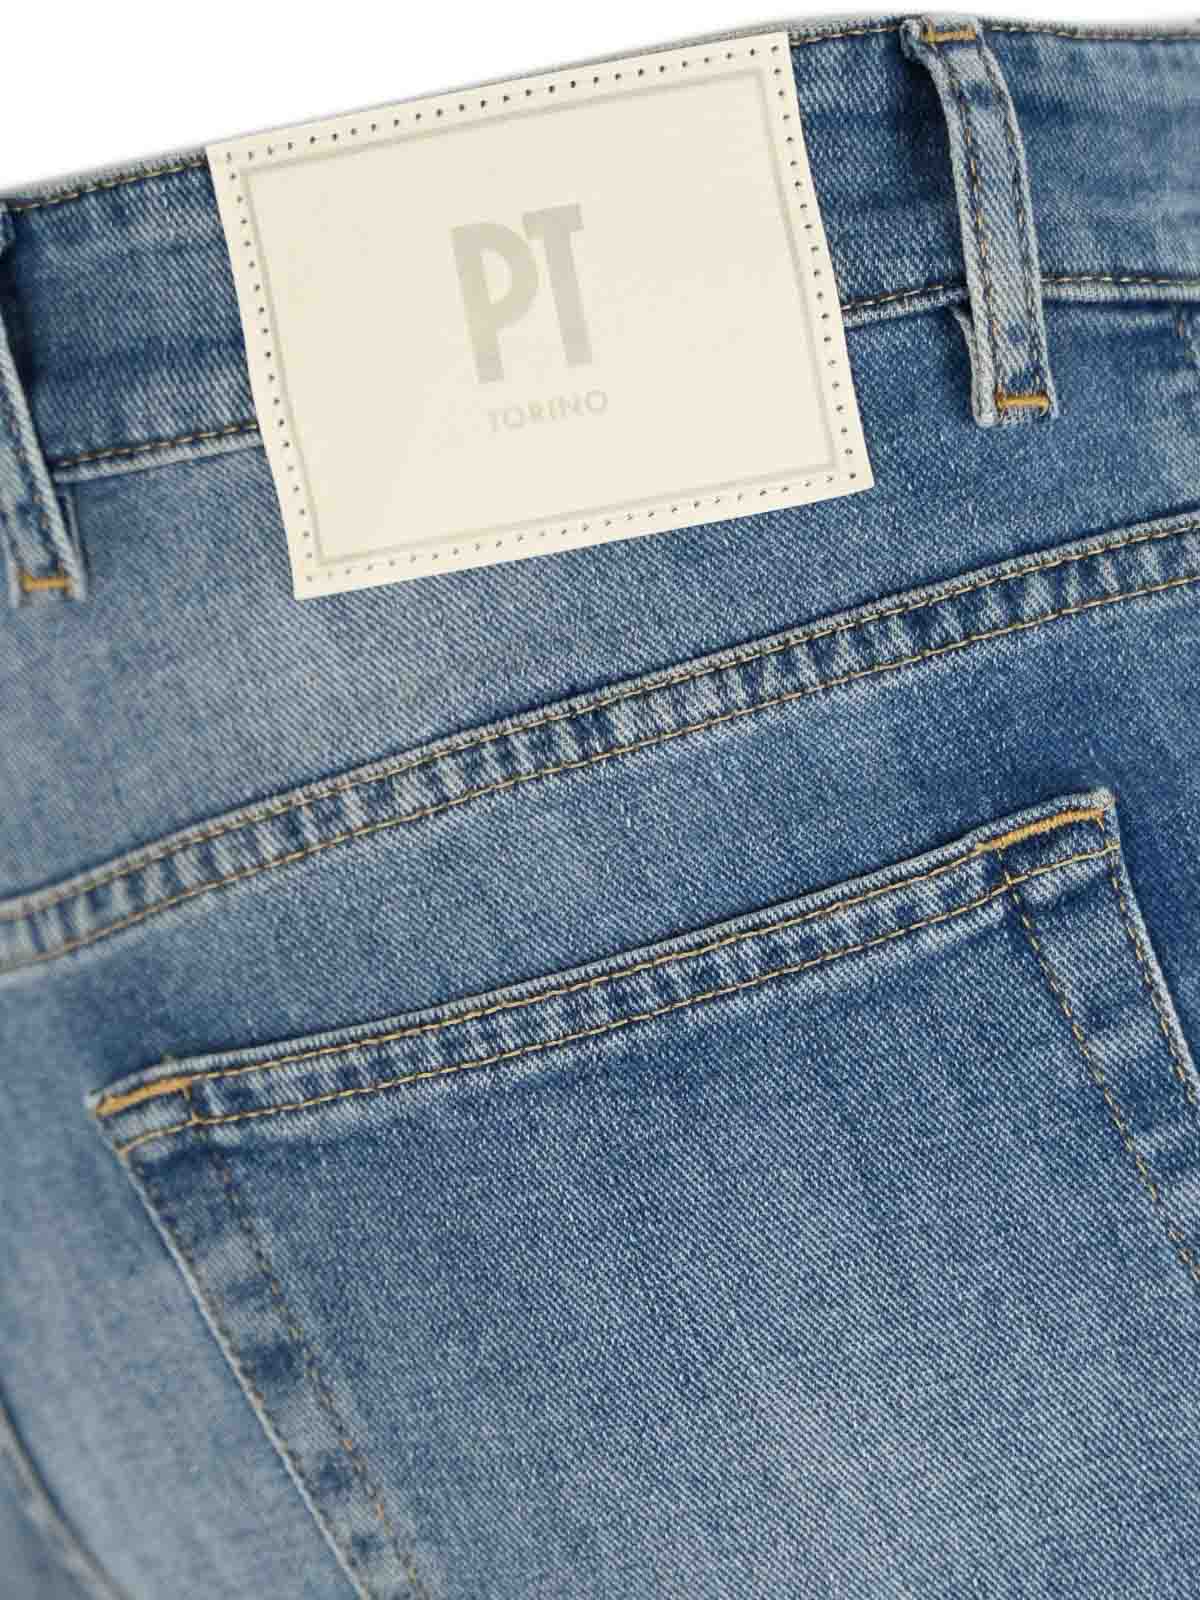 Shop Pt Torino Reggae 5 Pocket Denim Jeans